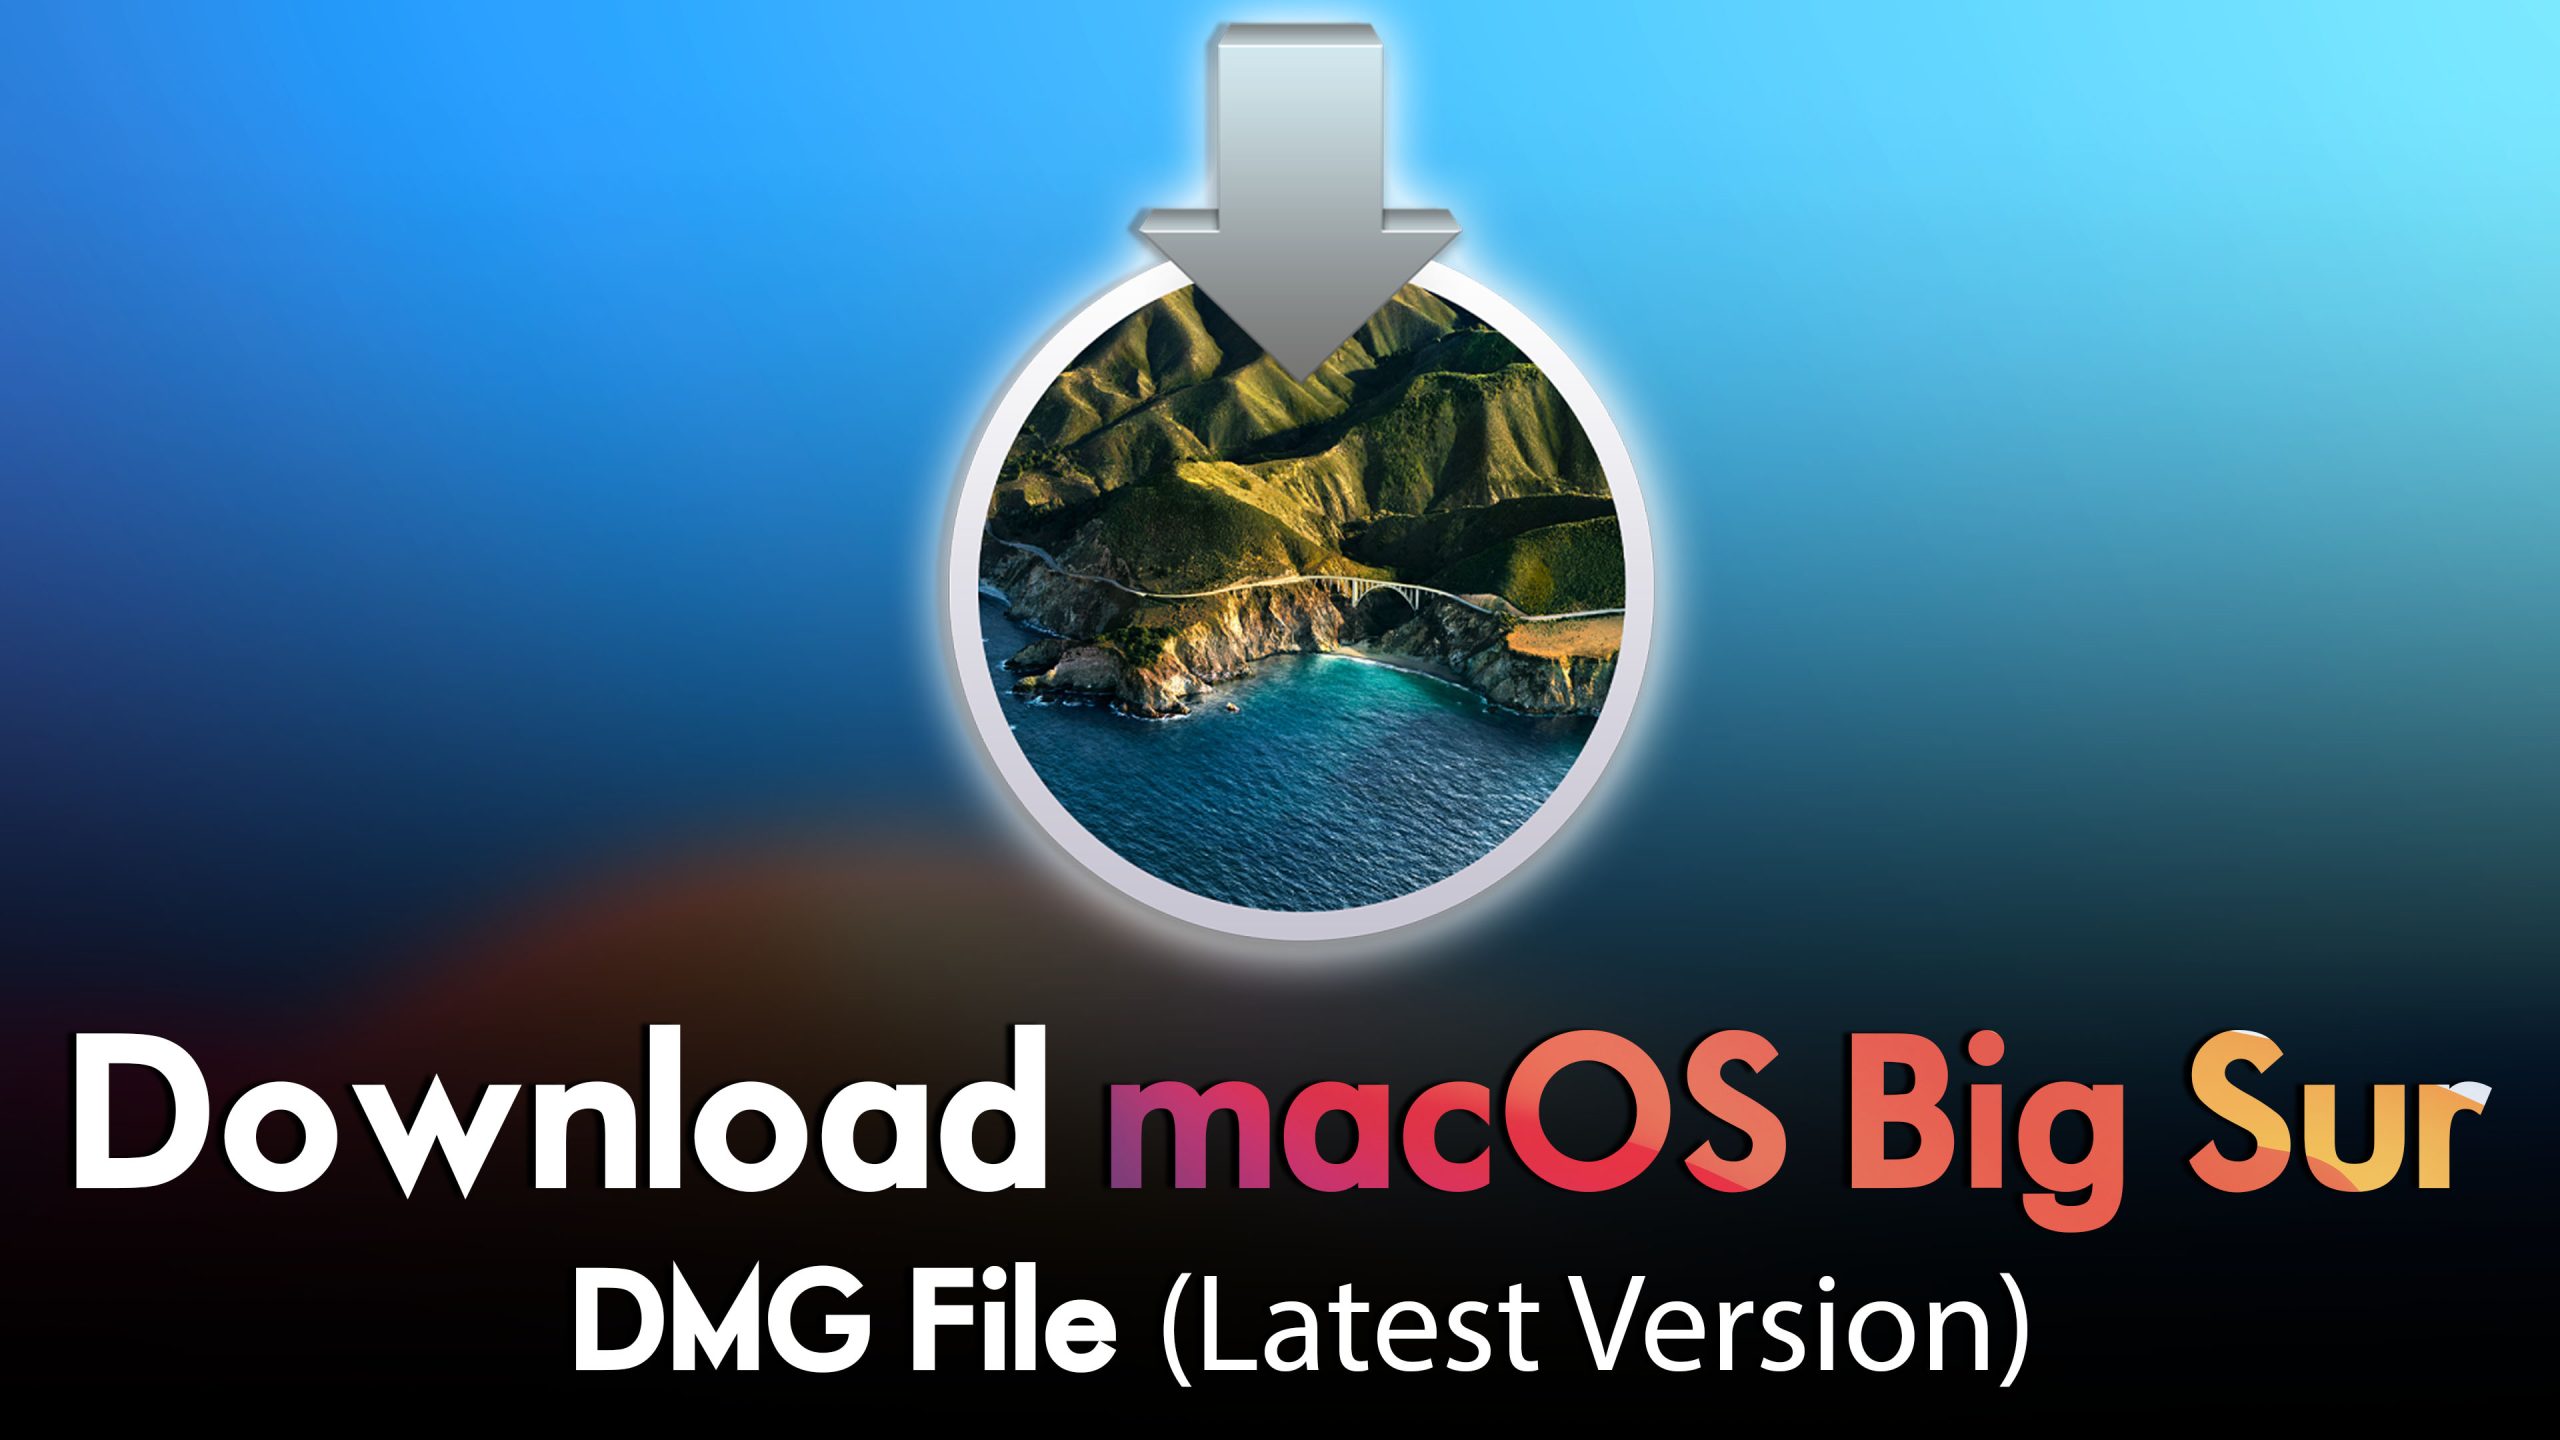 macos big sur 11.2 download dmg